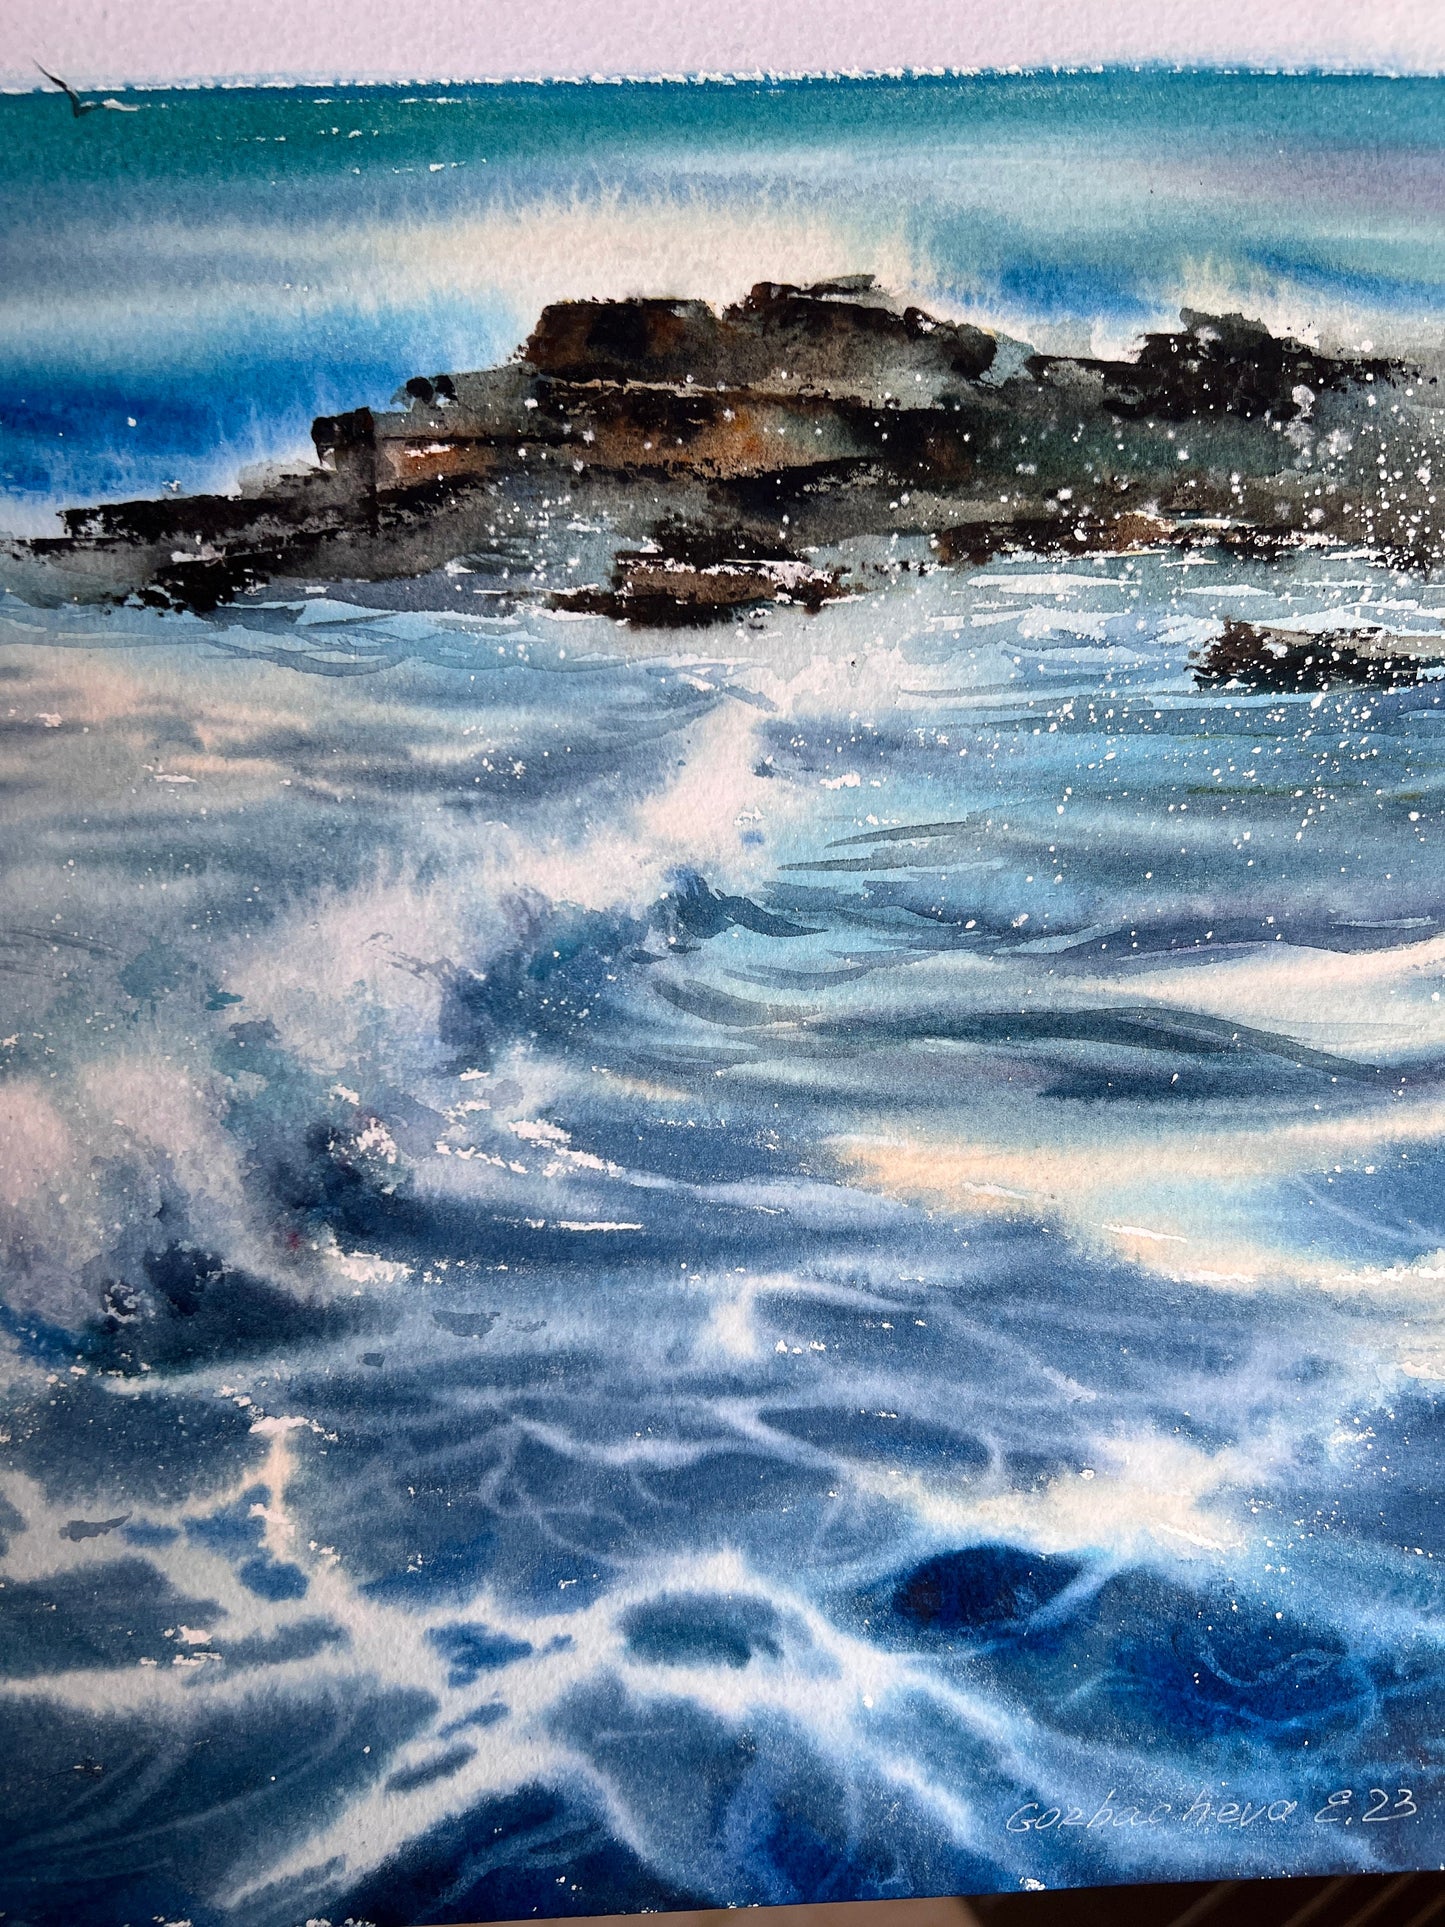 Seaview Painting, Watercolour Original Art, Sea Wave Artwork, Seascape, Hand-painted Ocean, Coastal Home Wall Decor